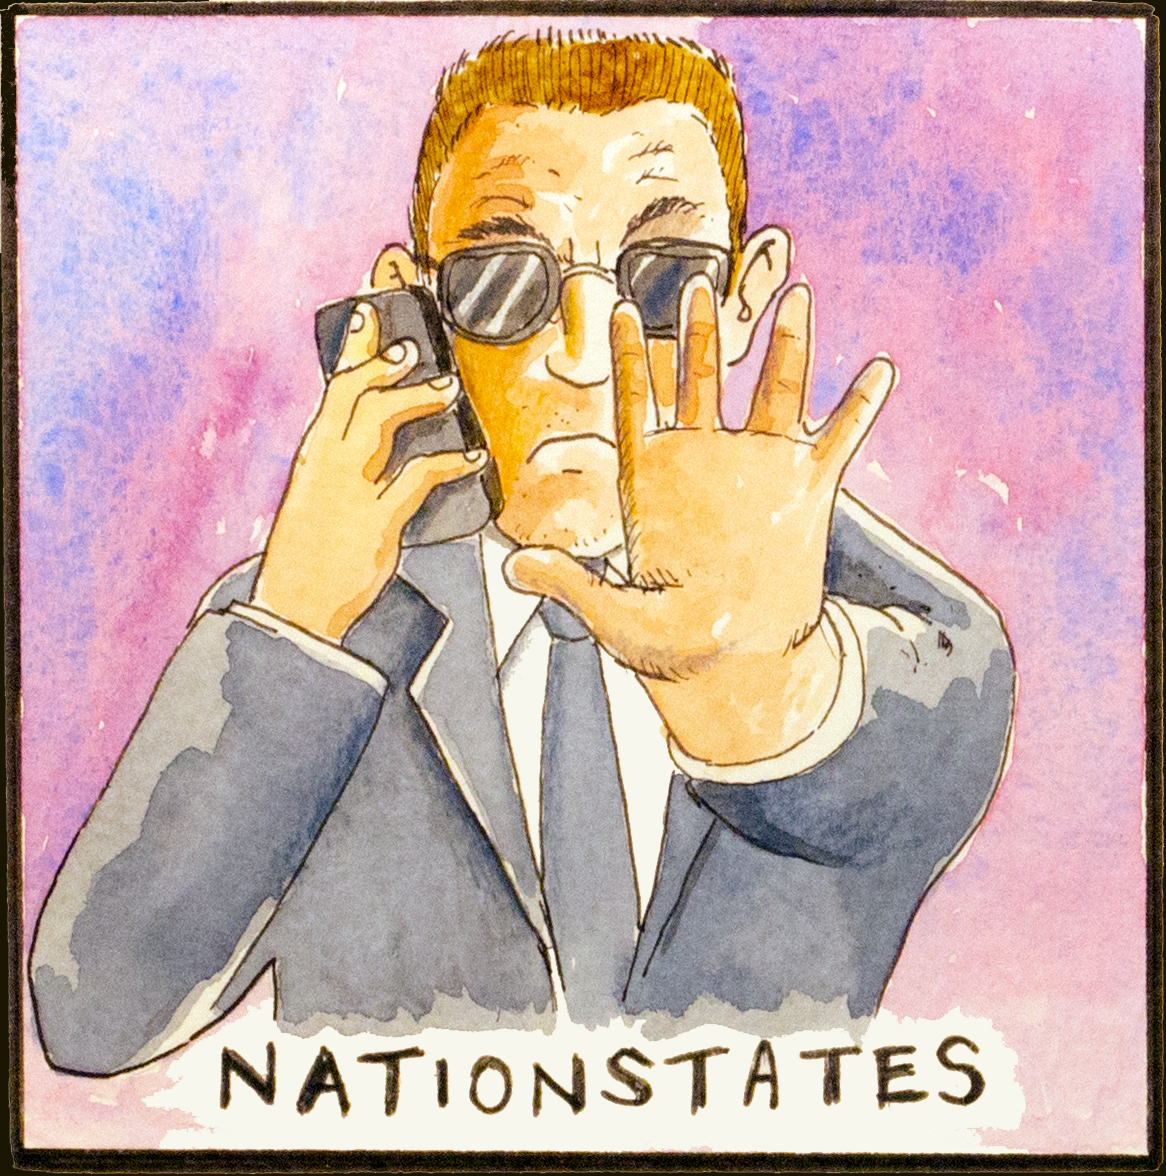 Nation states cartoon